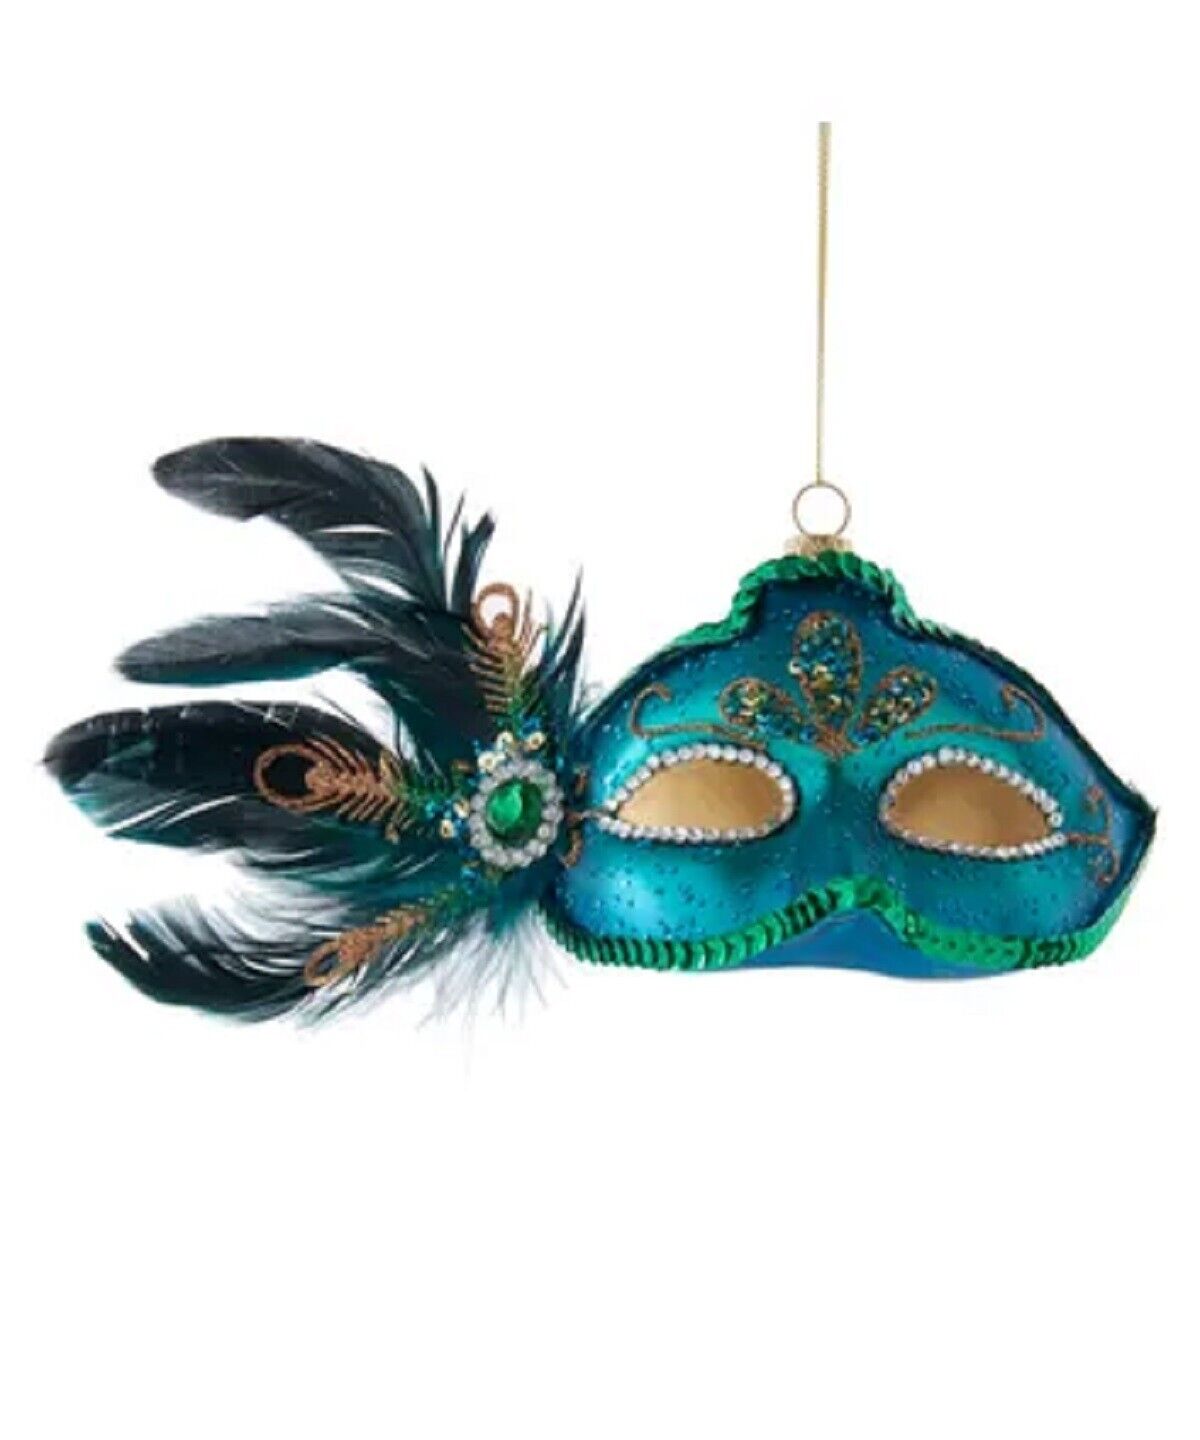 Kurt Adler Christmas Christmas Ornament Glass Peacock Mask Jeweled Feathers